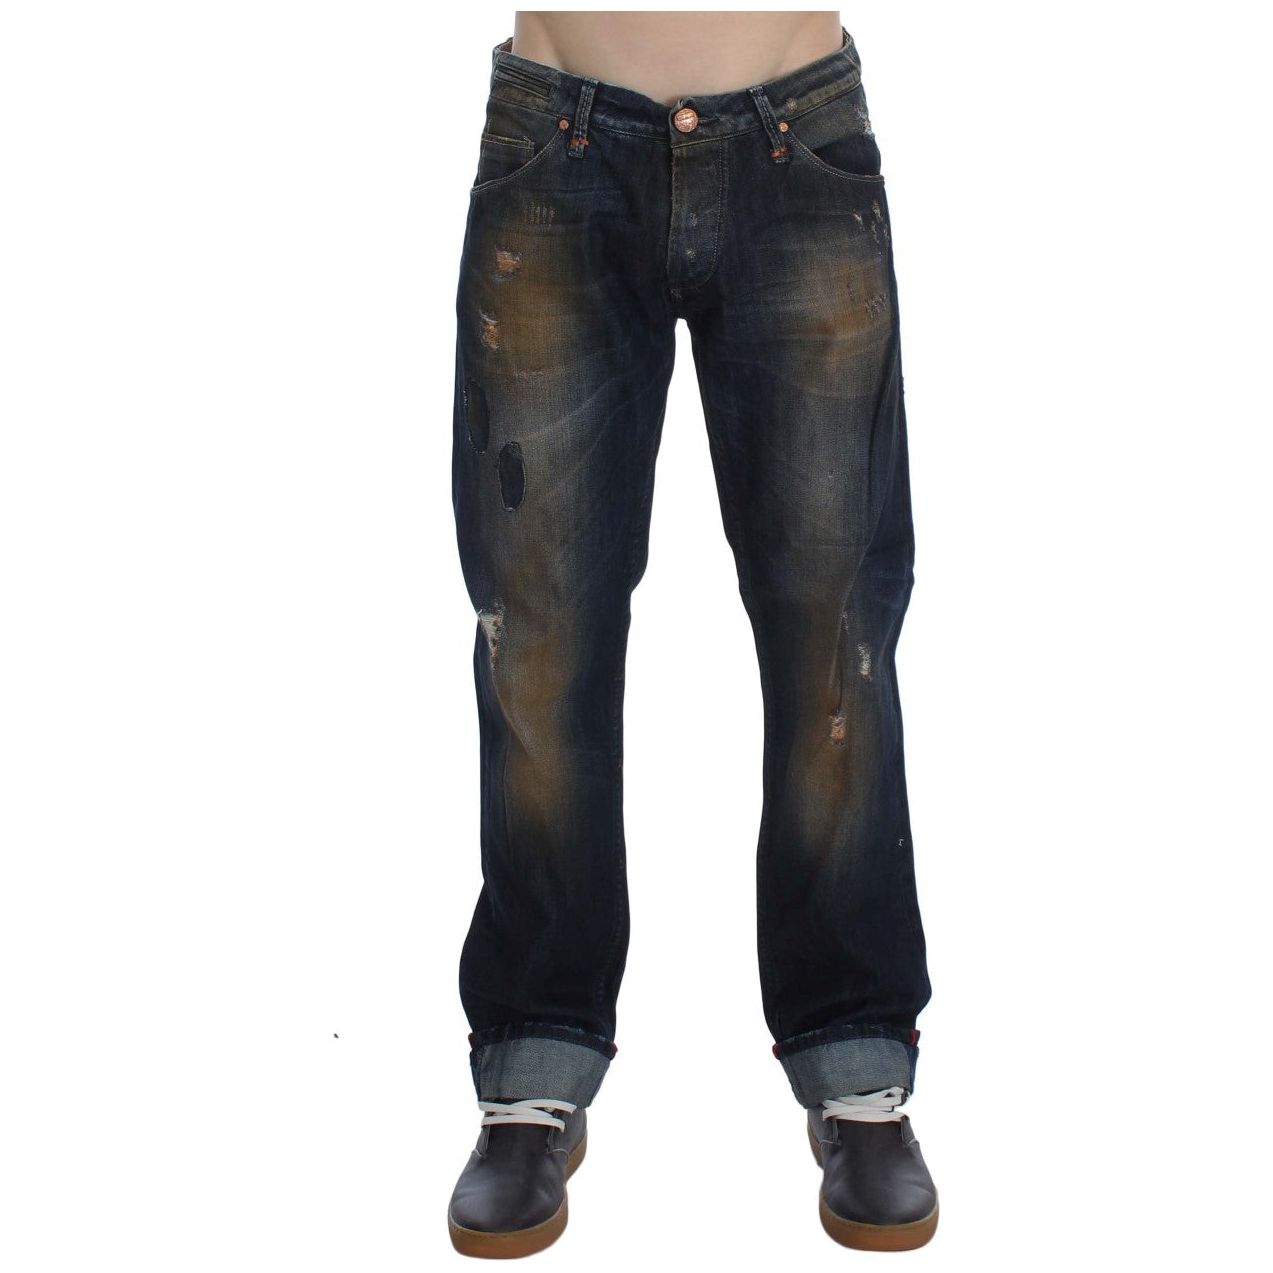 Acht Elegant Straight Fit Men's Denim Jeans blue-wash-cotton-regular-straight-fit-jeans-1 298995-blue-wash-cotton-regular-straight-fit-jeans-2-7.jpg